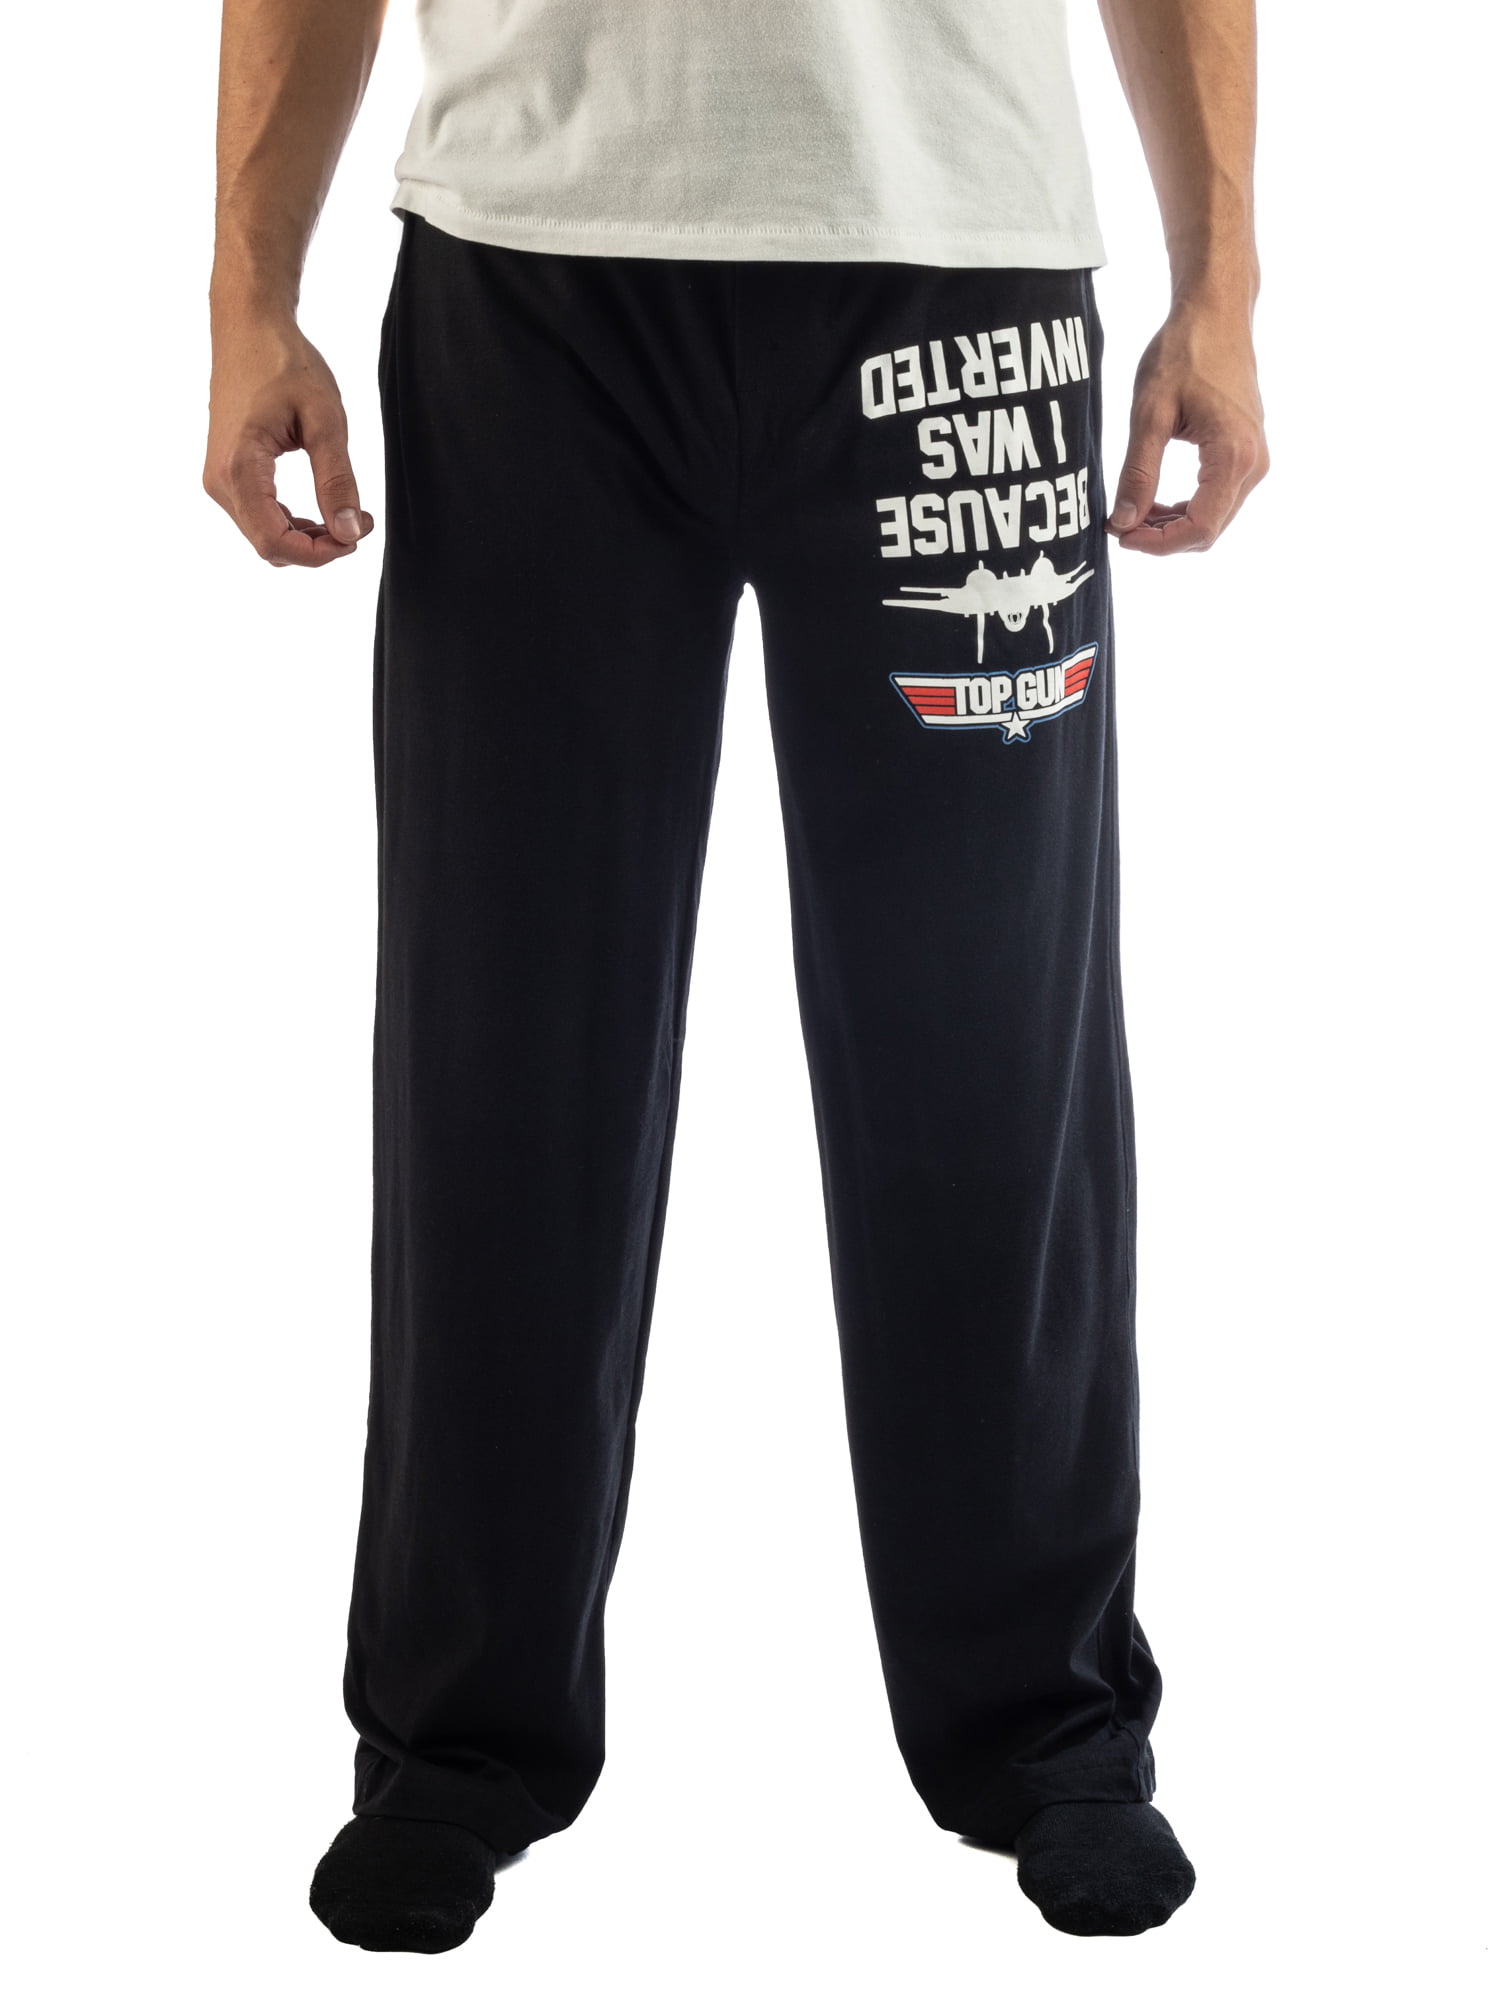 TOP GUN - Top Gun Men's Pajama Pant - Walmart.com - Walmart.com